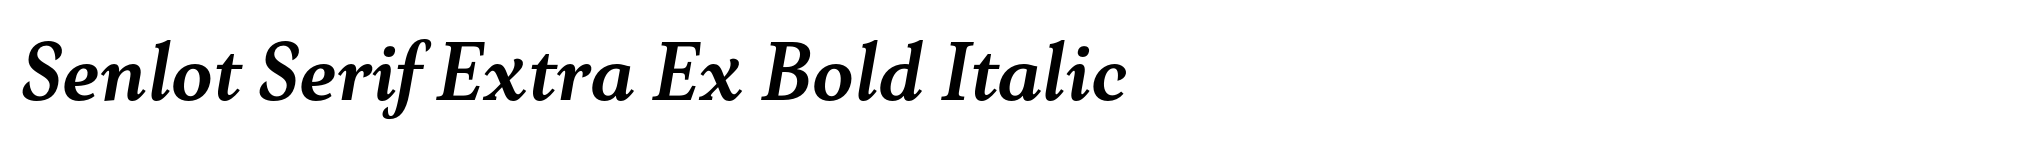 Senlot Serif Extra Ex Bold Italic image